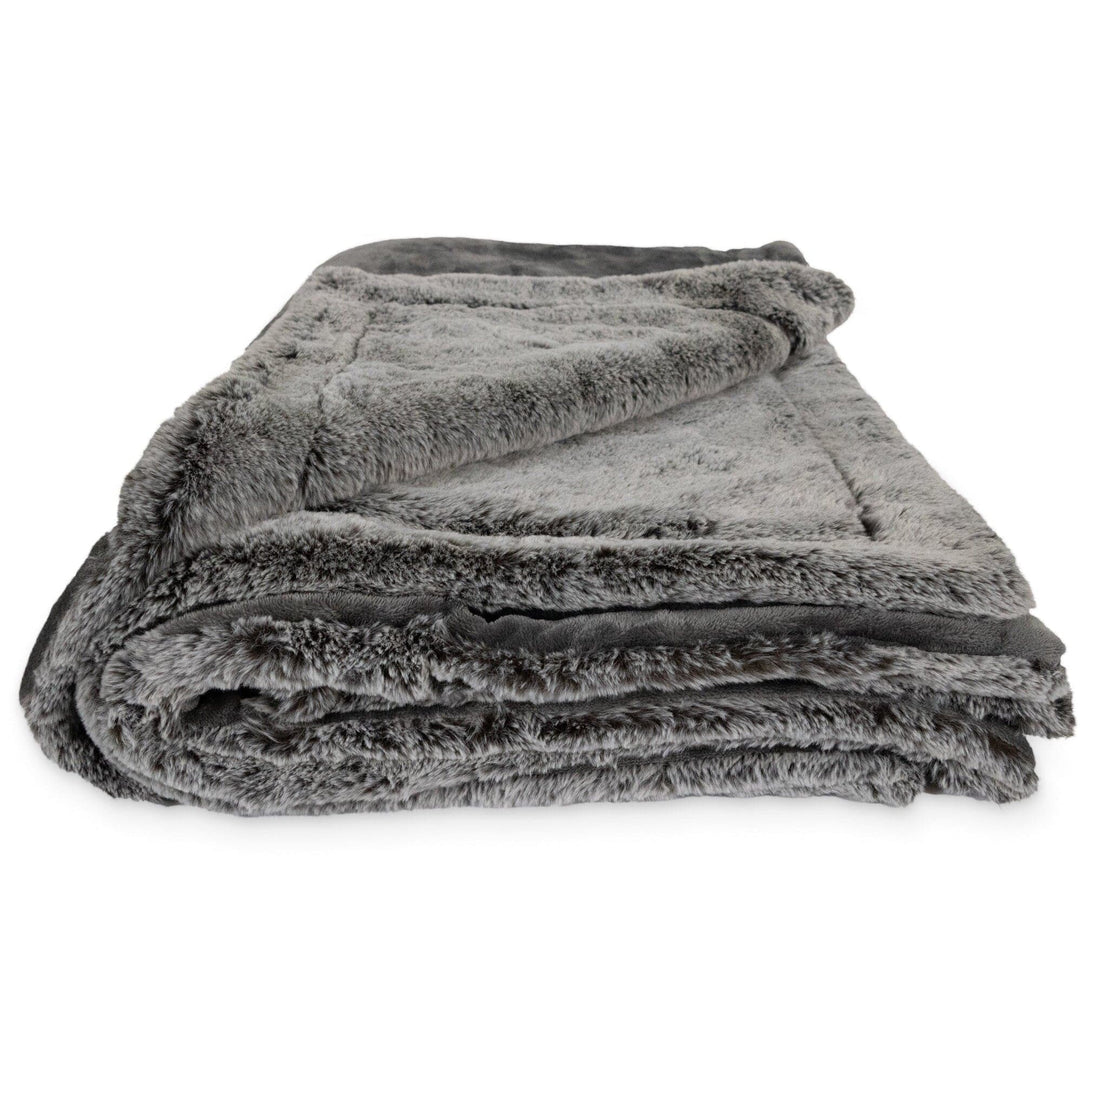 XL Chinchilla Throw Blanket